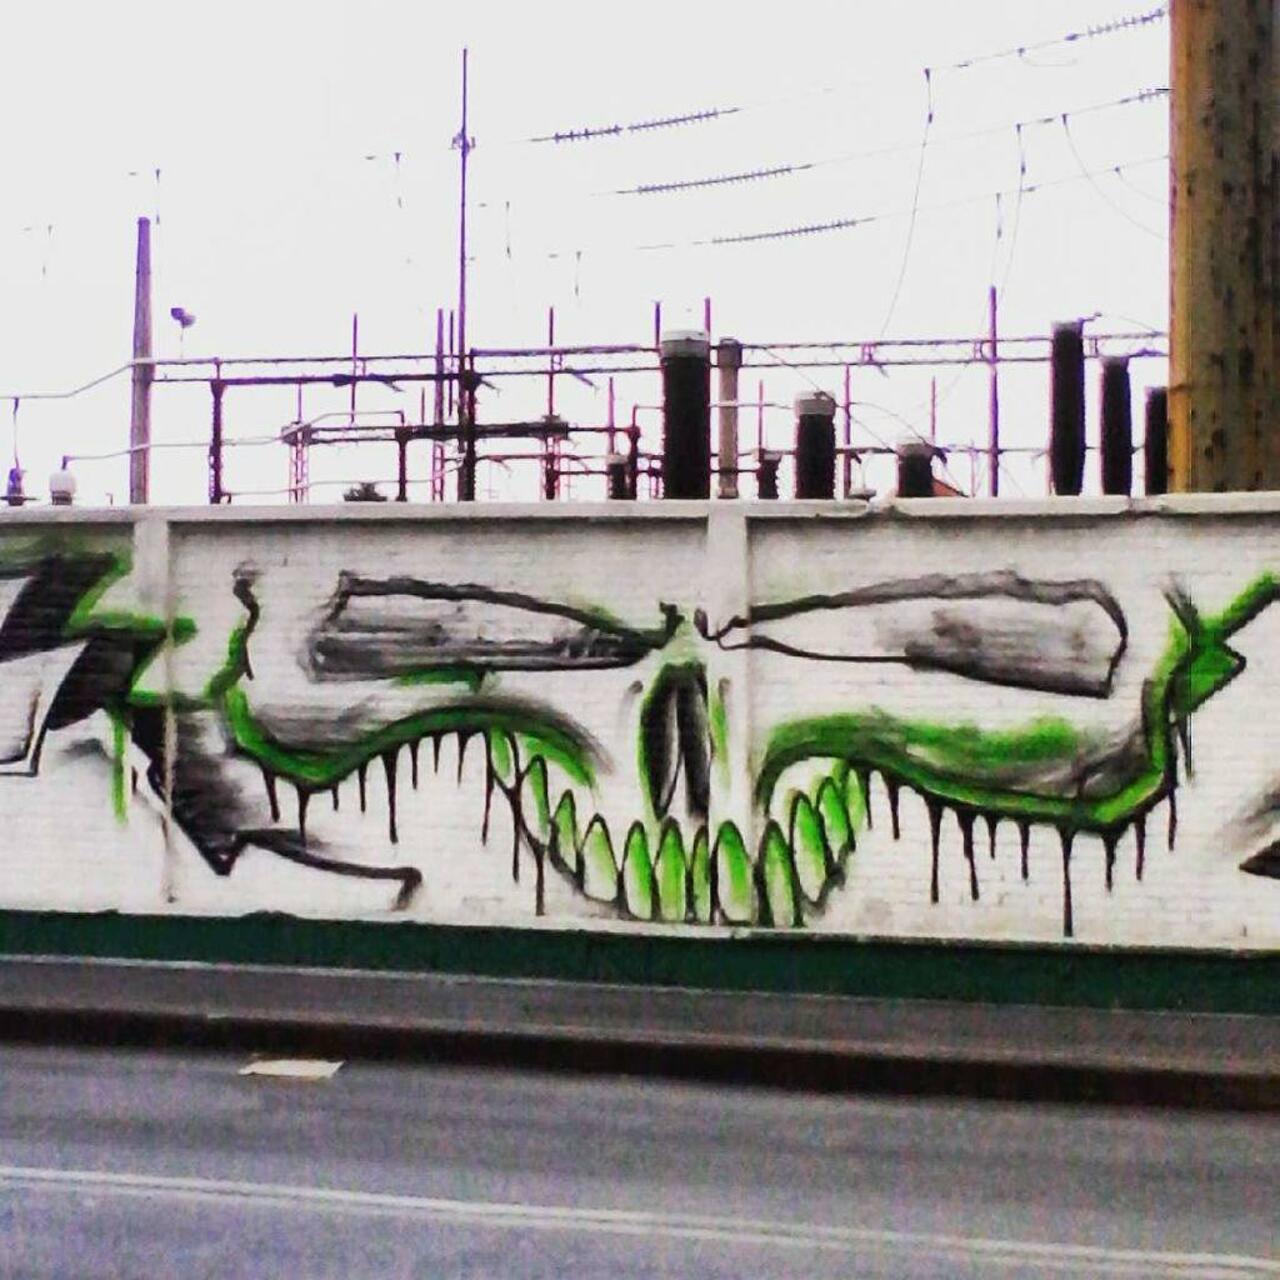 #Mexico #MexicoCity #StreetArt #Graffiti #StreetArtMexico #Urban #Art #Mural #Architecture #Wall #Black #White #Bri… http://t.co/naBcYRelEN